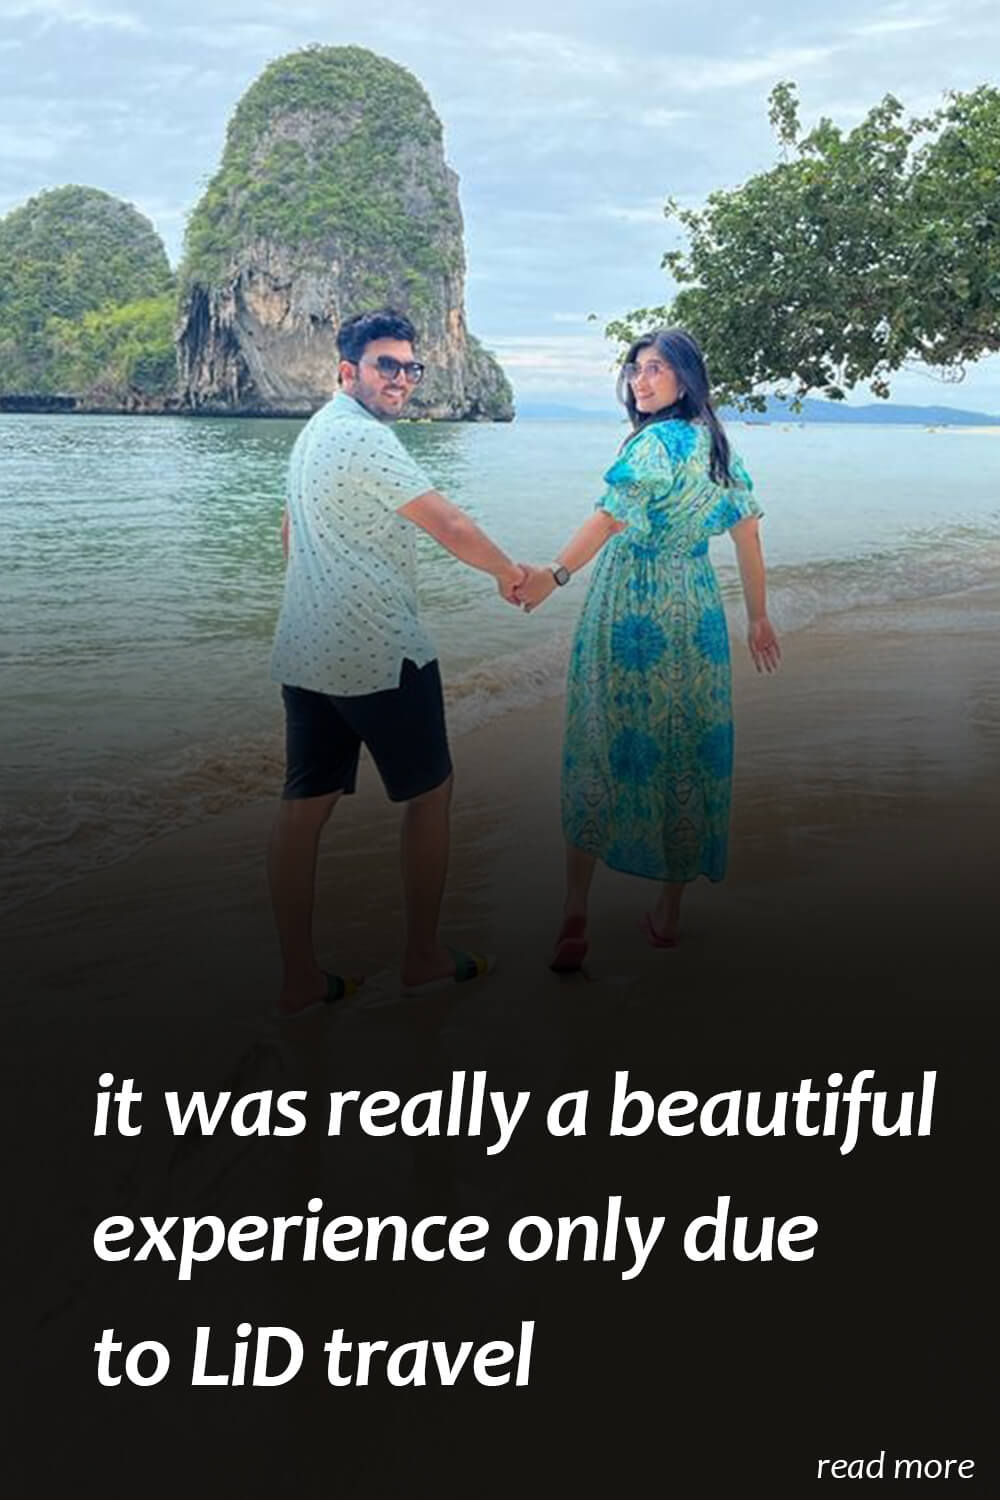 singapore phuket krabi honeymoon tour package reviews with LiD travel